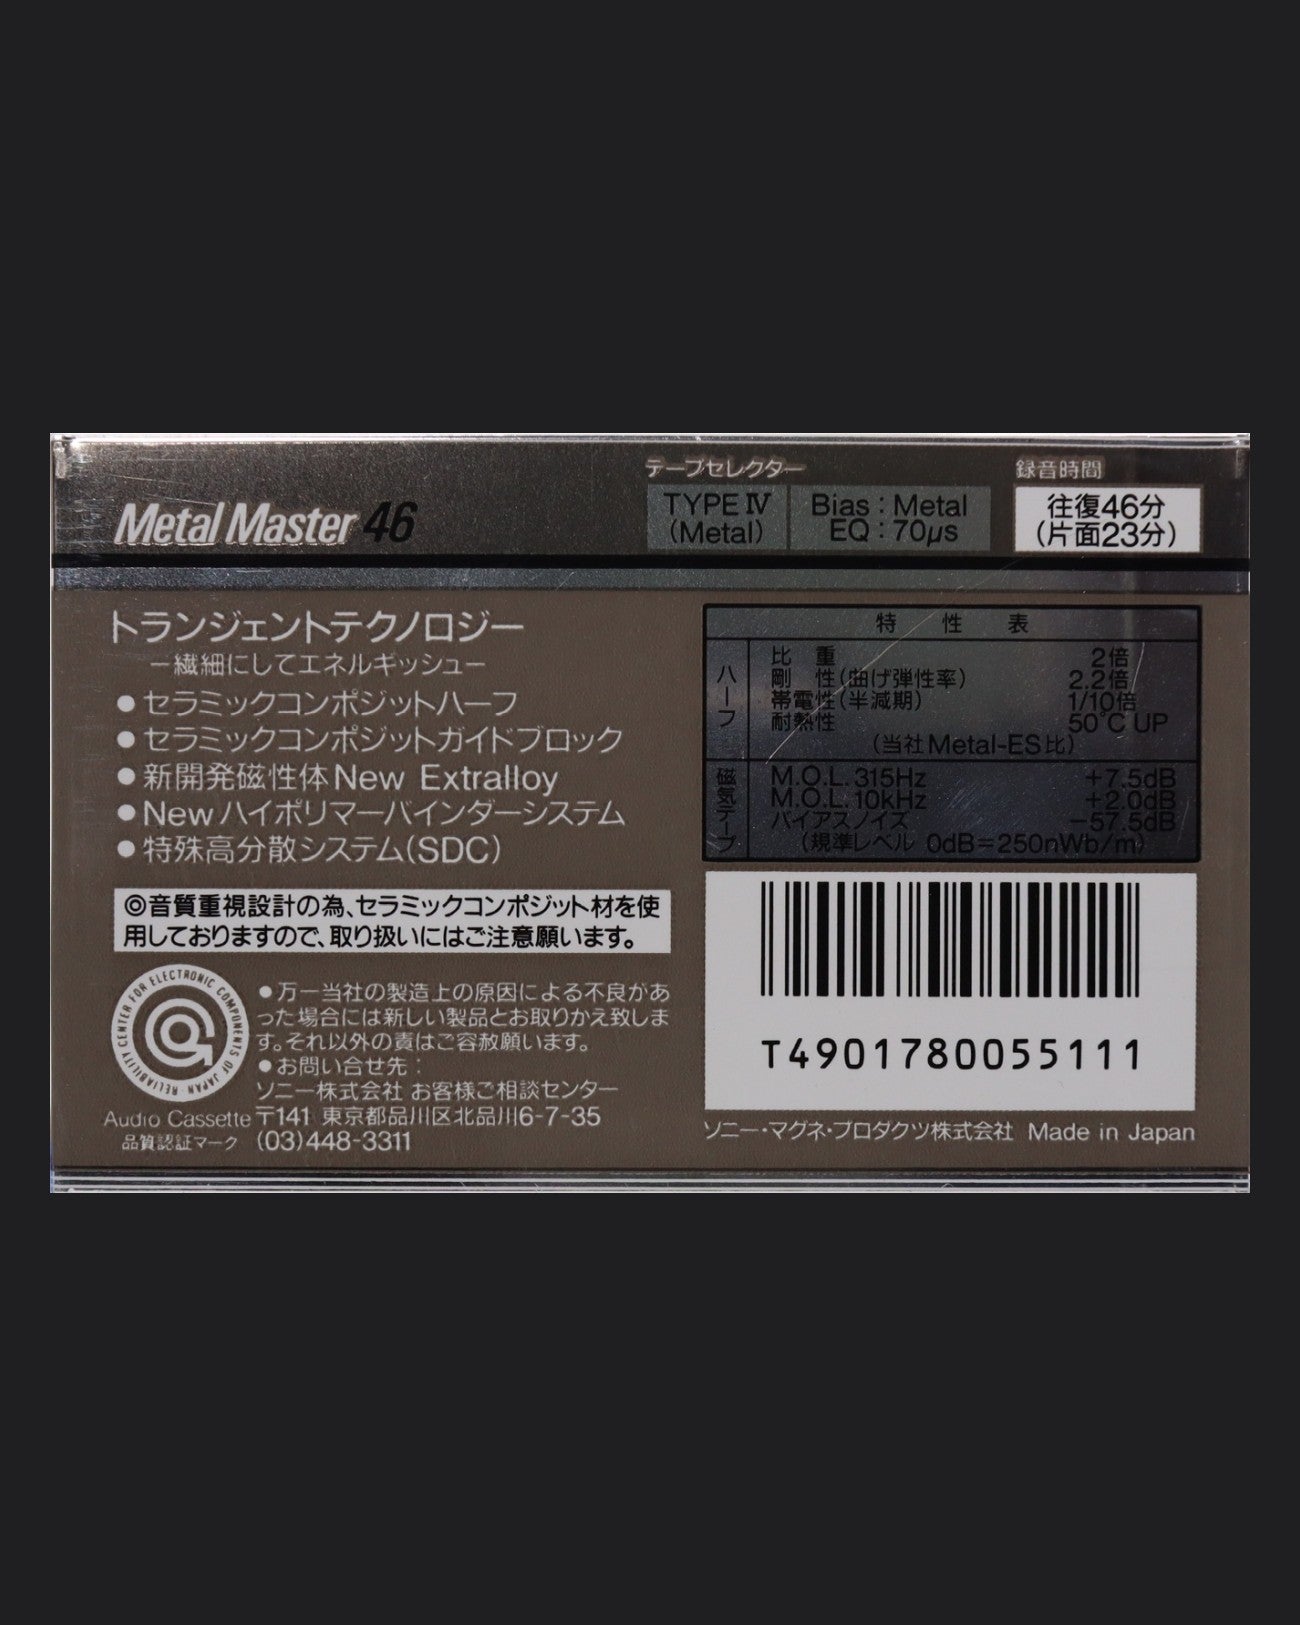 Sony Metal Master (1988-1989 JP) Ultra Ferric